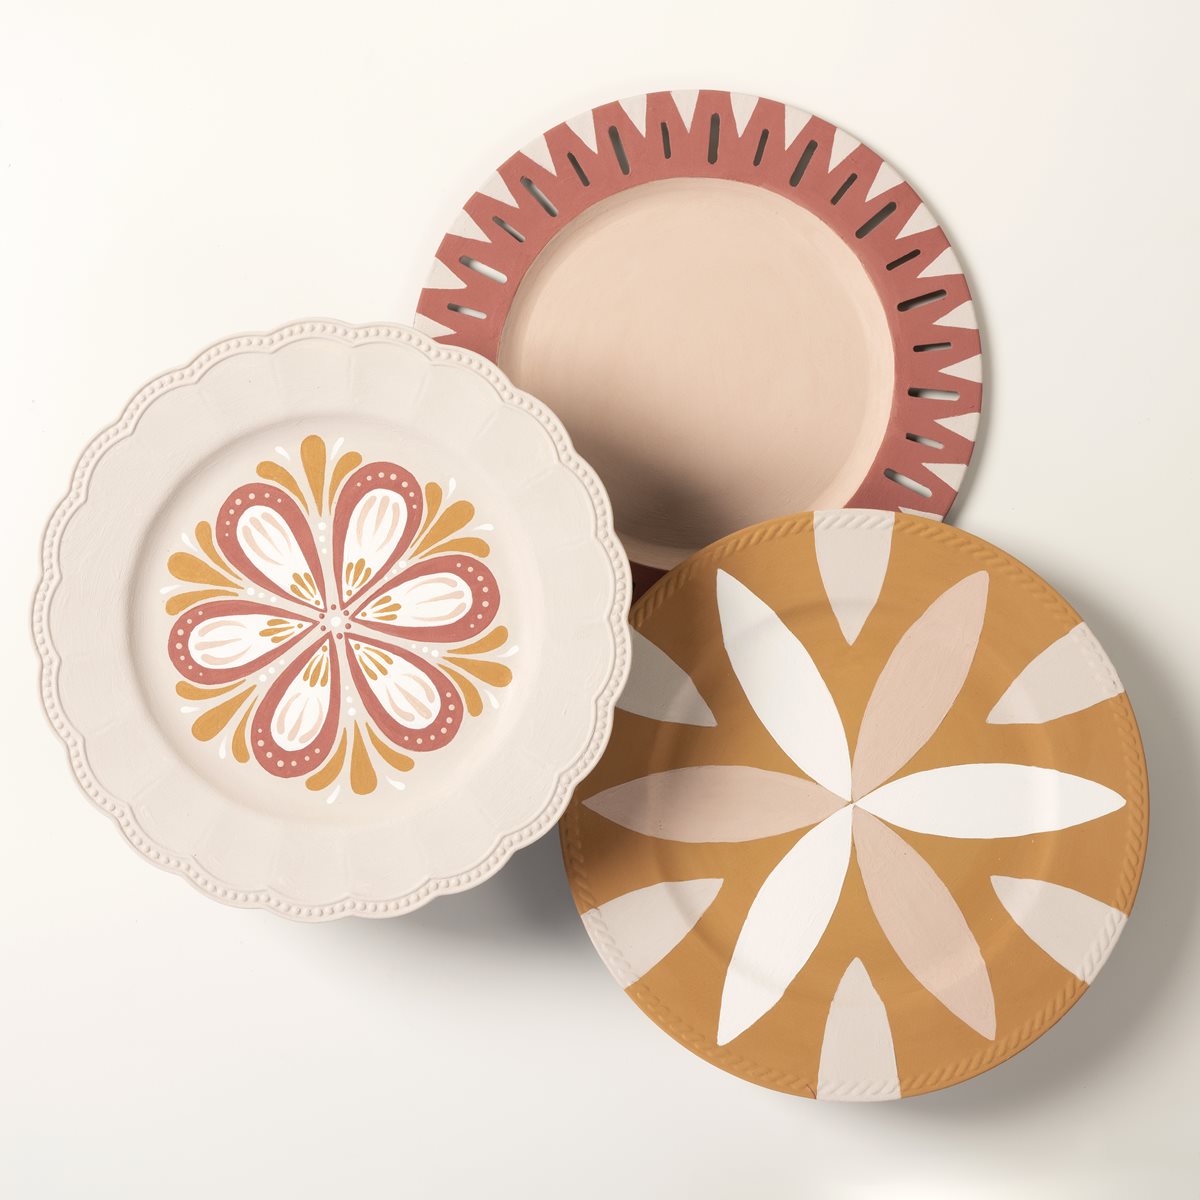 Terra Cotta Decorative Plates